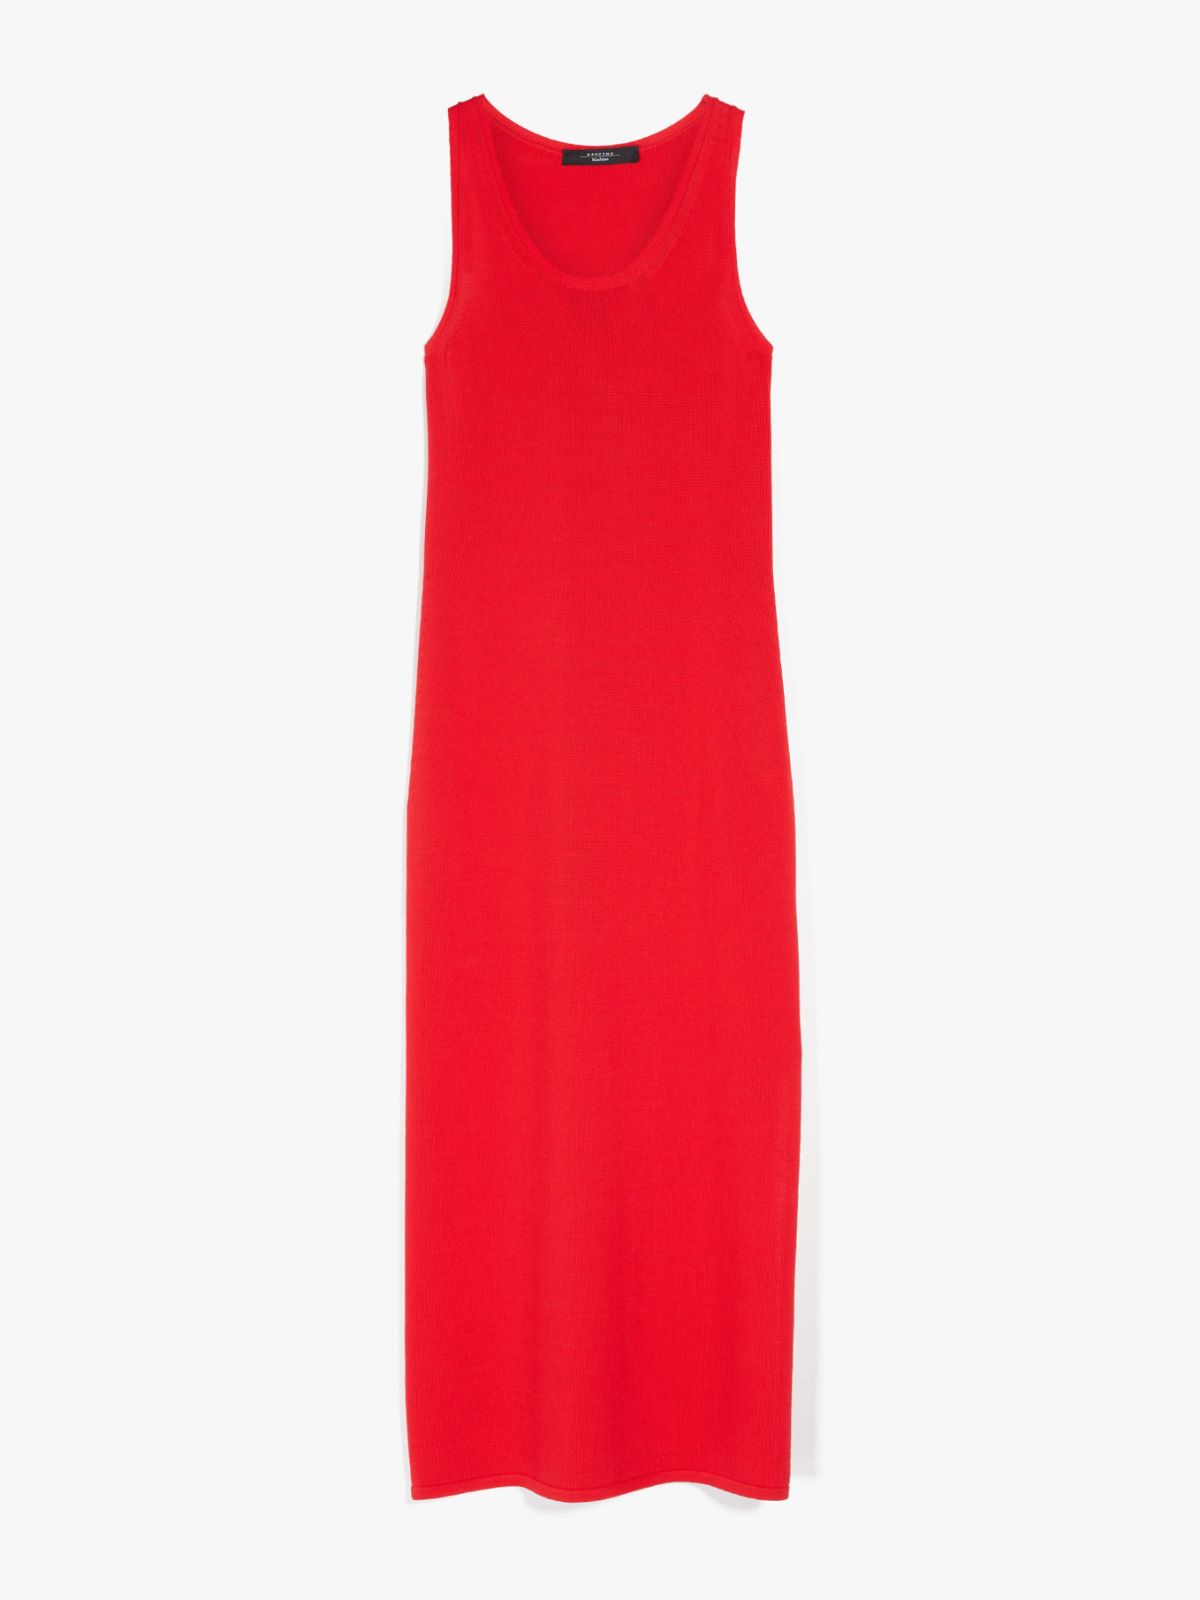 Viscose crêpe dress - RED - Weekend Max Mara - 5